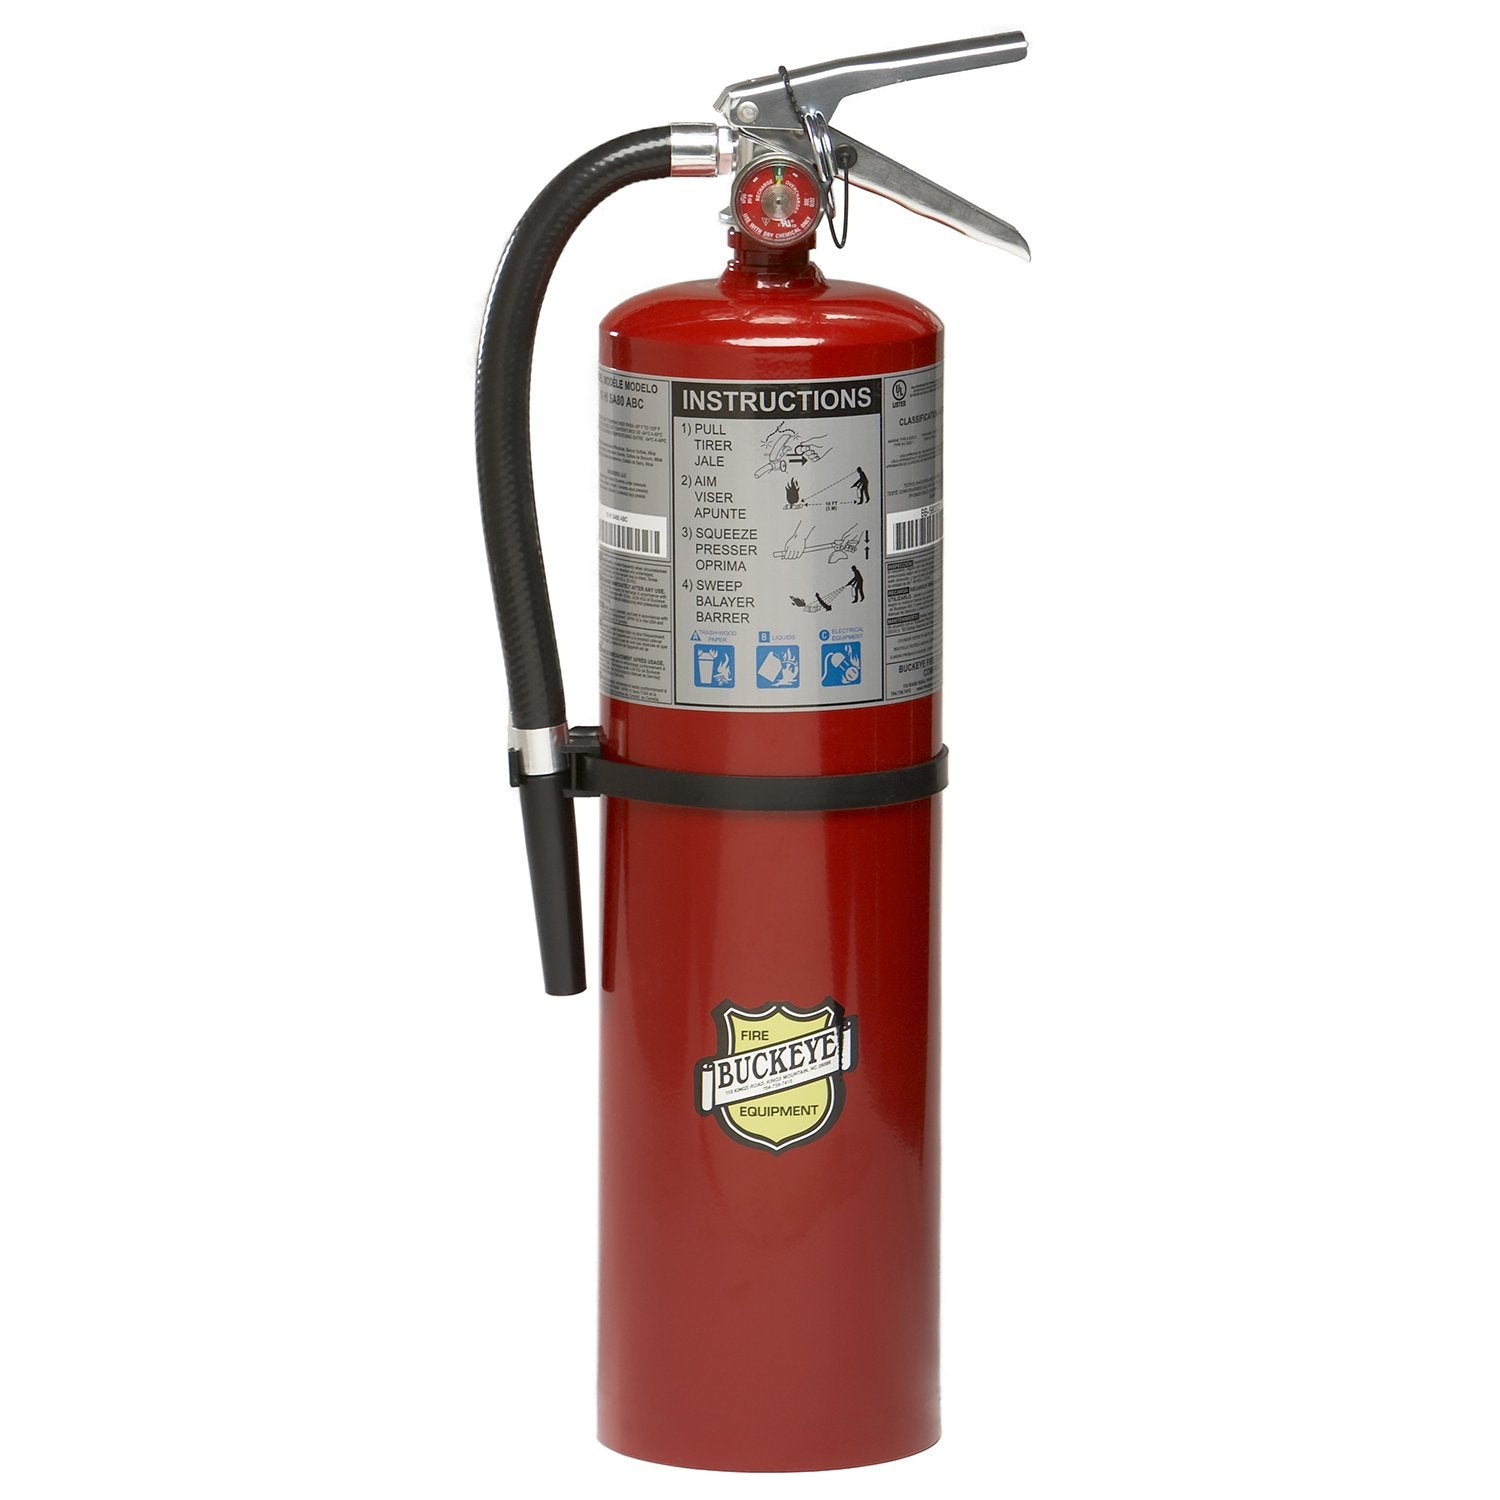 Buckeye 11340 ABC 10lb Dry Chemical Fire Extinguisher